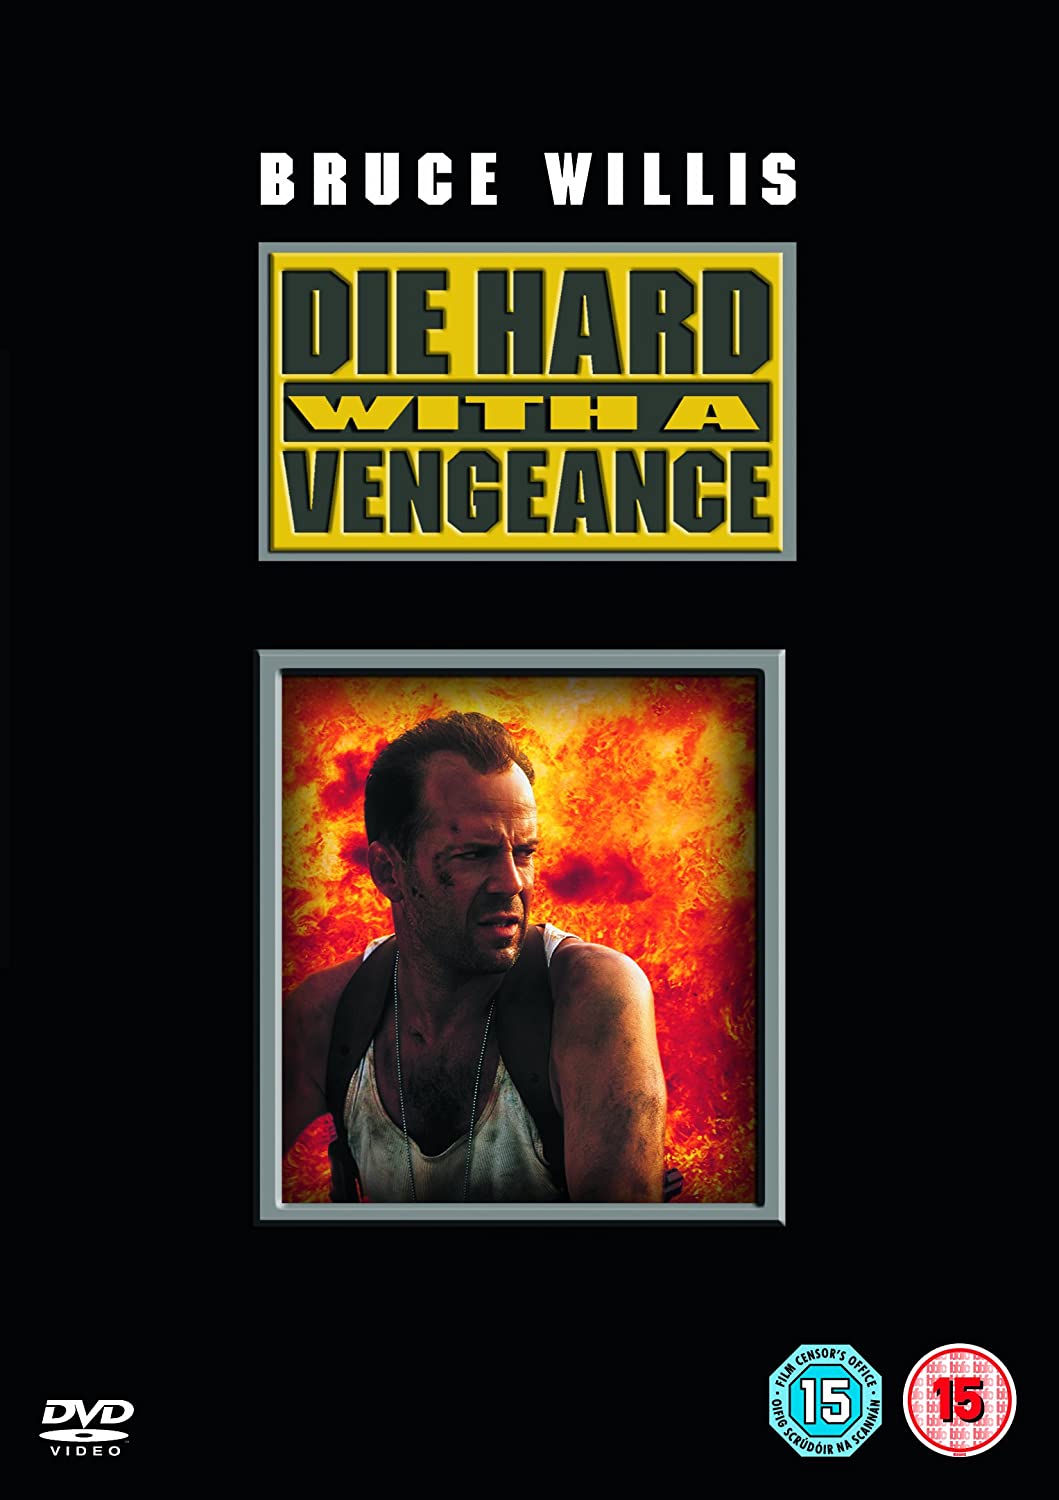 Die Hard With A Vengeance - Action/Thriller [DVD]